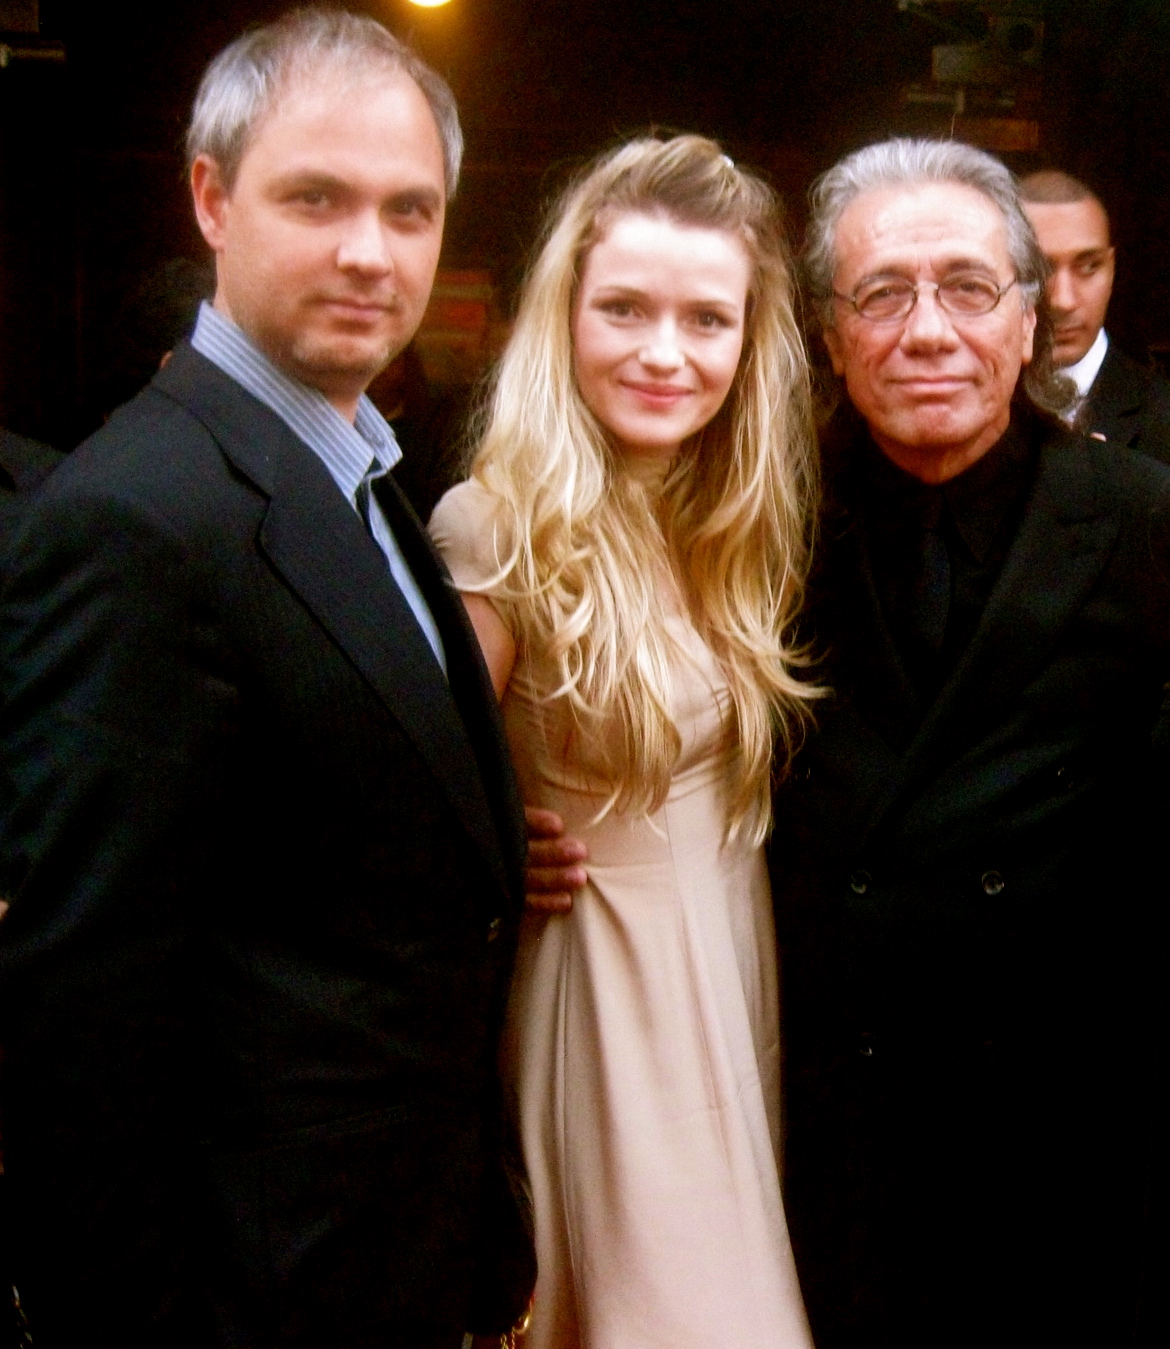 Alexandre Avancini, Nanda Ziegler and Edward James Olmos at event of 2011 Latino International Film Festival